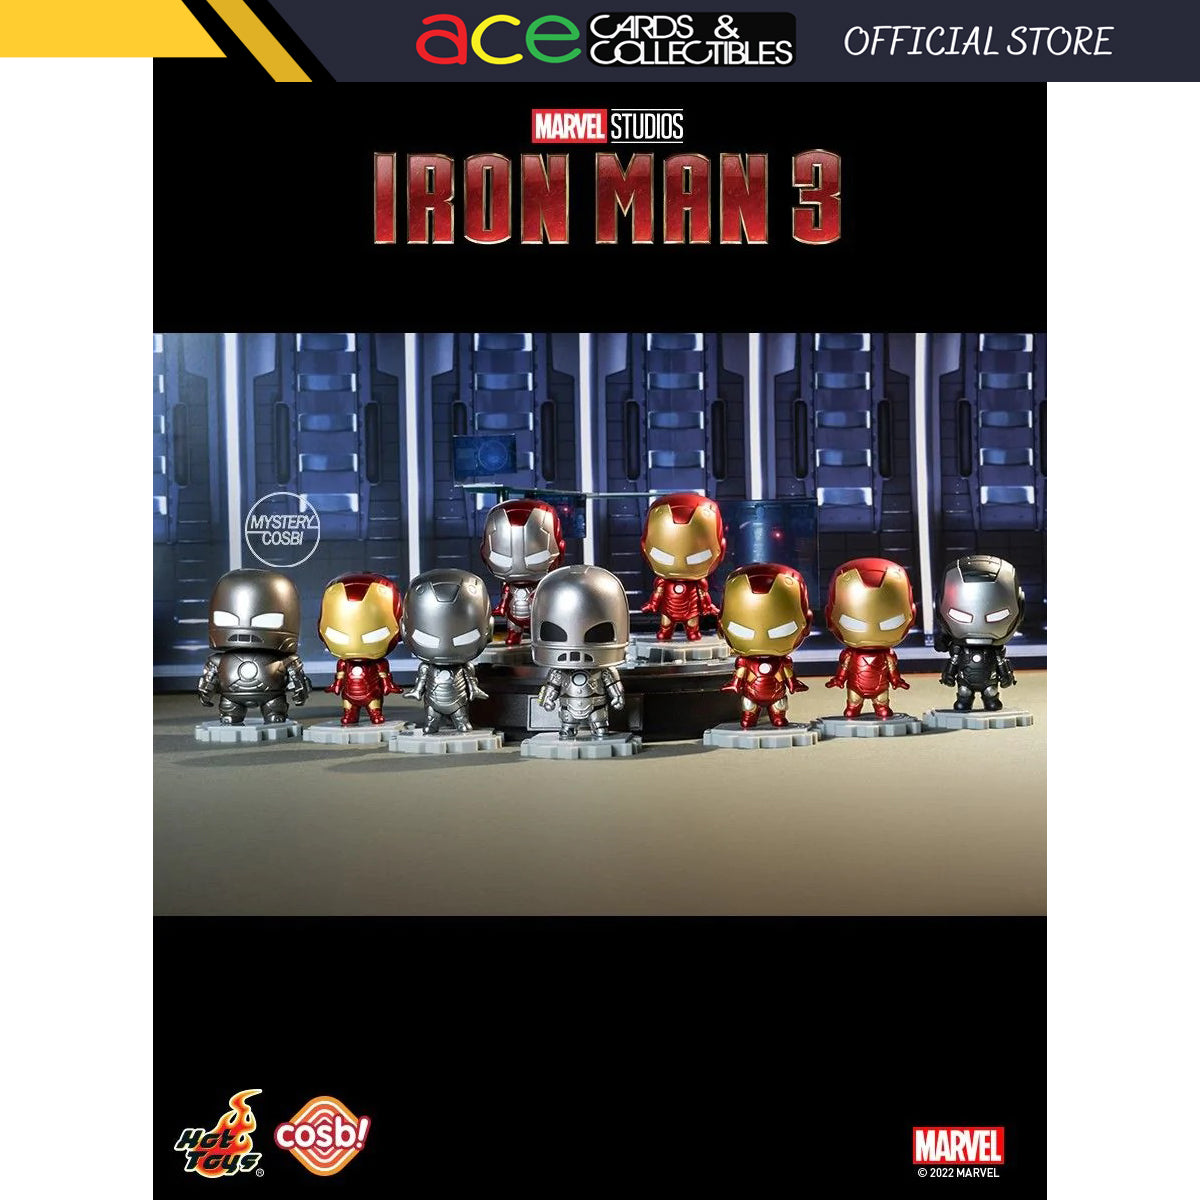 Iron Man 3: Cosbi Bobble-Head Collection "Iron Man"-Single Box (Random)-Hot Toys-Ace Cards & Collectibles